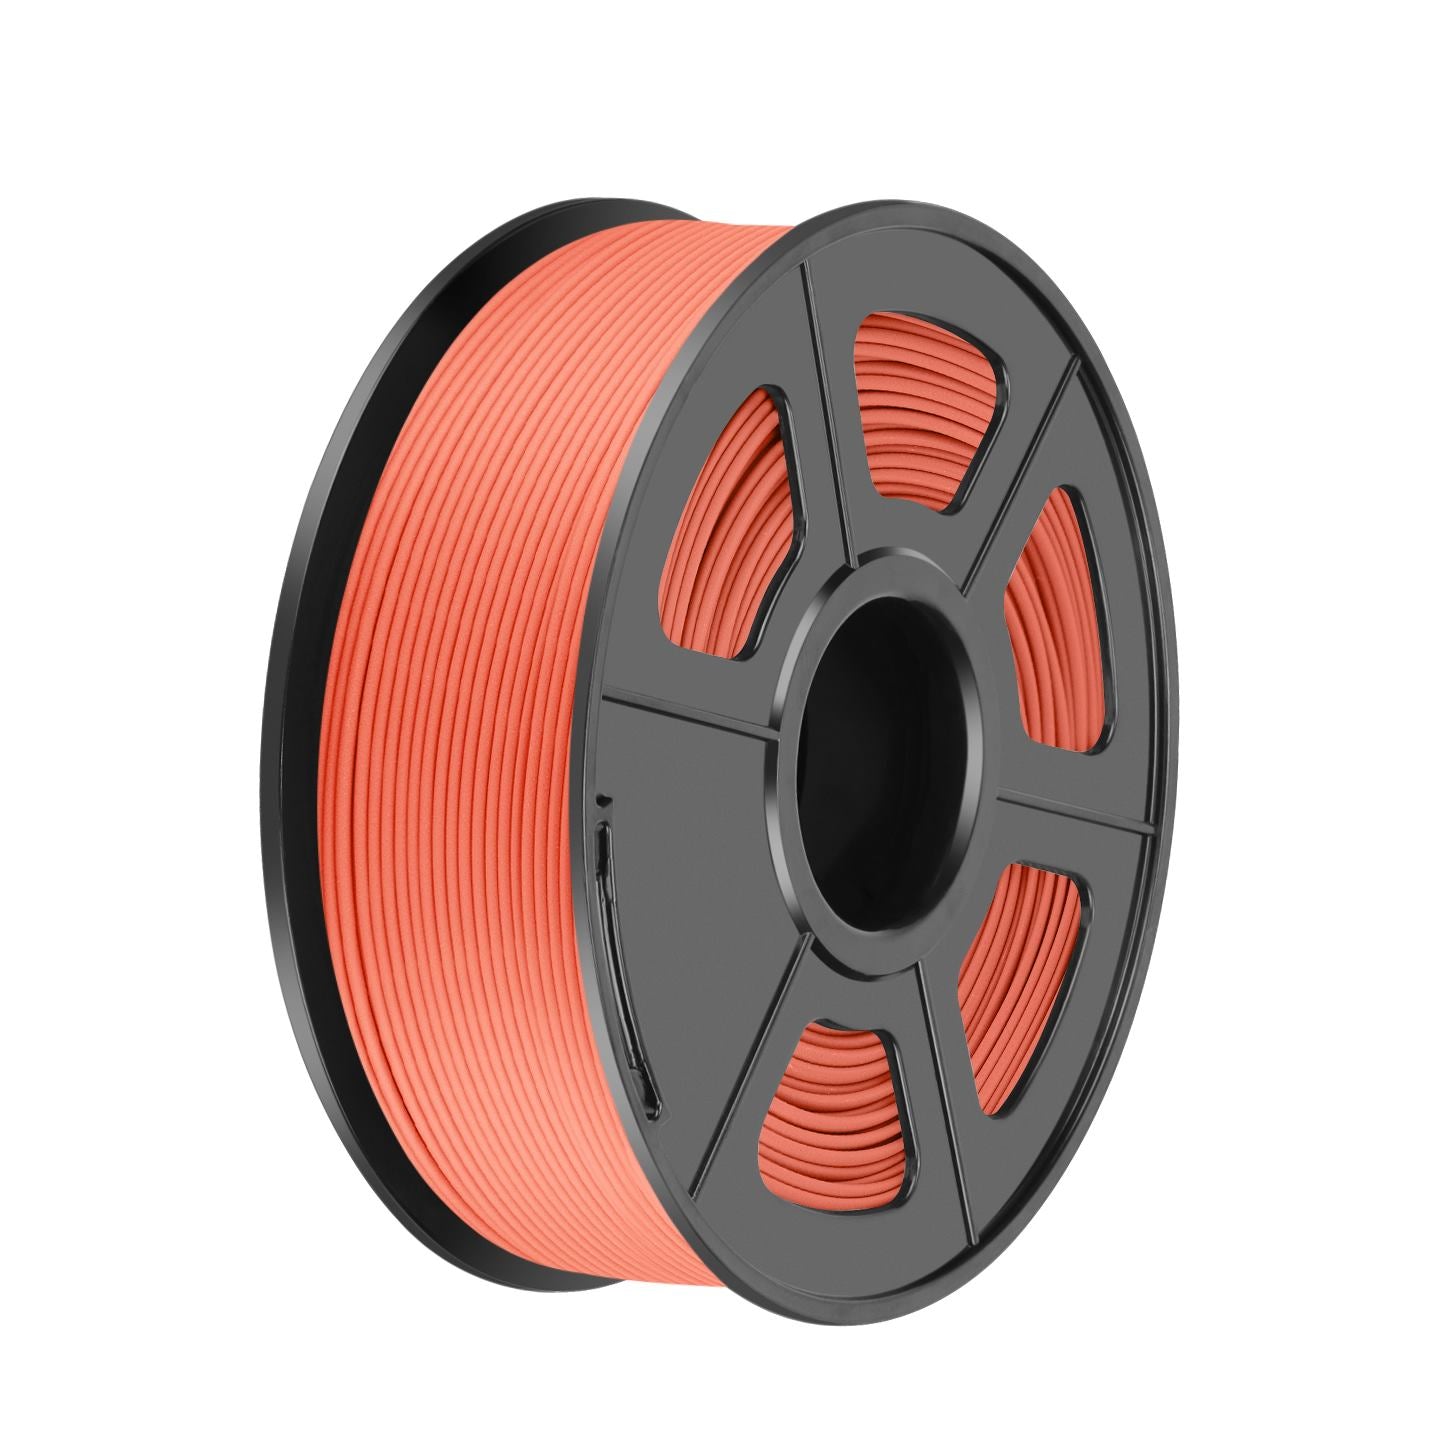  SUNLU ABS Filament 1.75mm, Low Printing Temperature